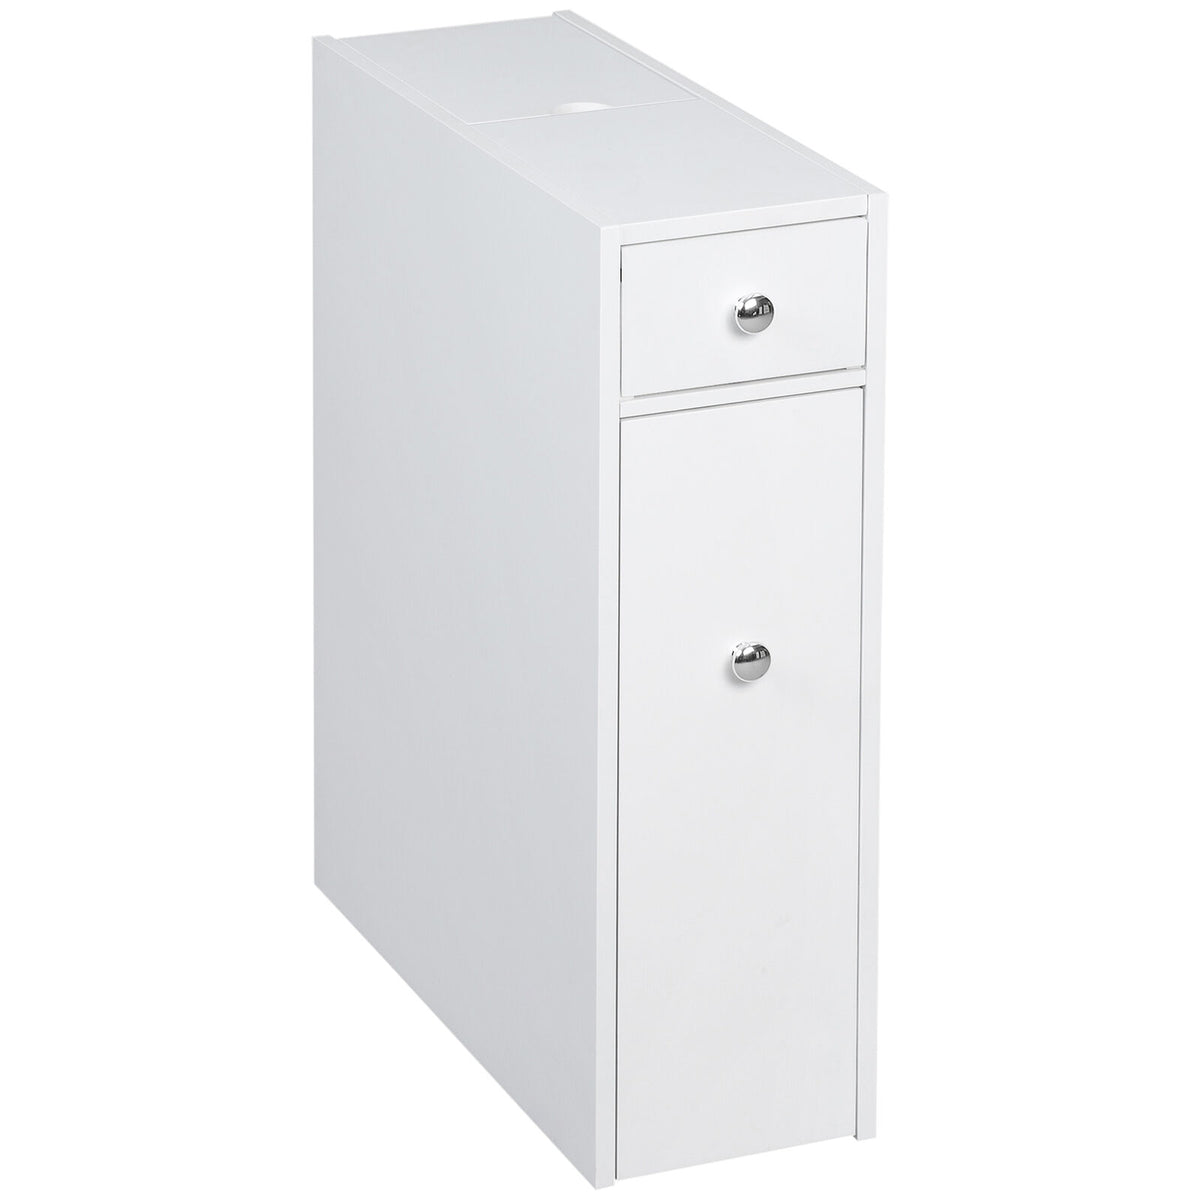 White Freestanding Slide-Out Storage Bathroom Cabinet w/ Narrow Design